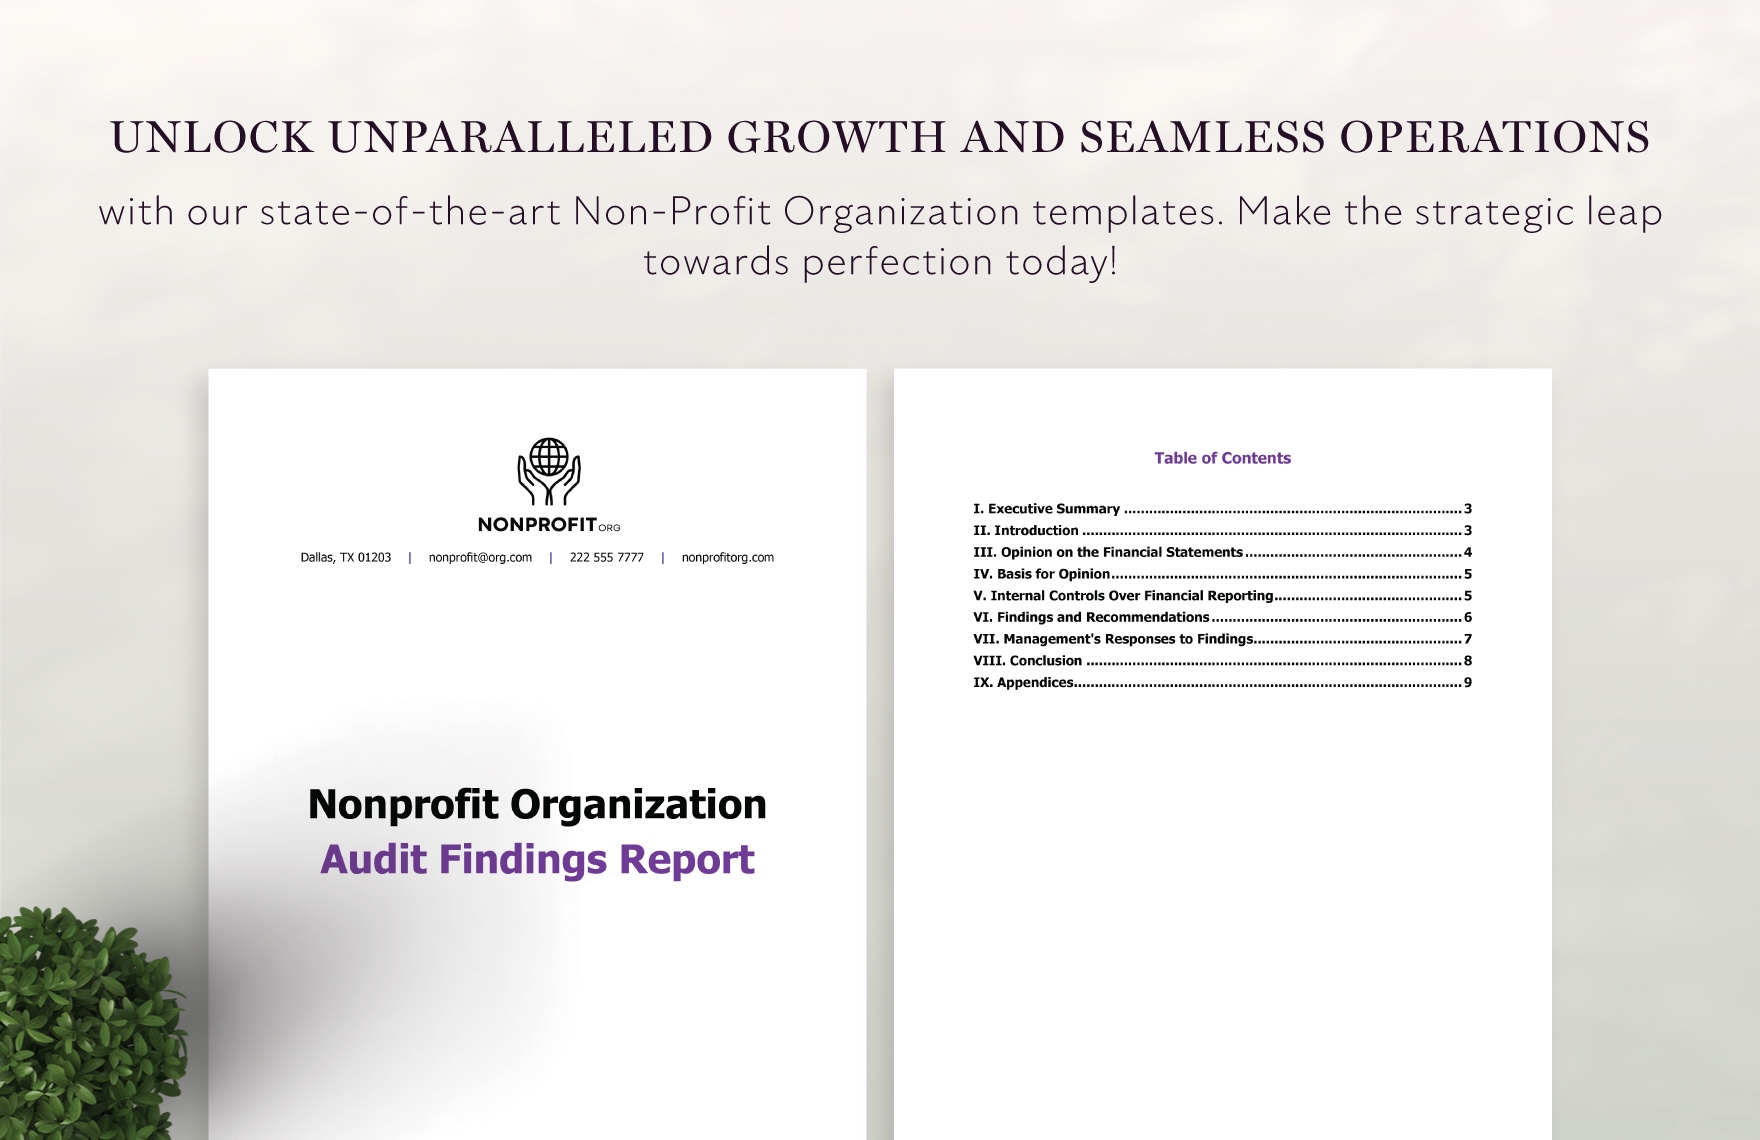 Nonprofit Organization Audit Findings Report Template